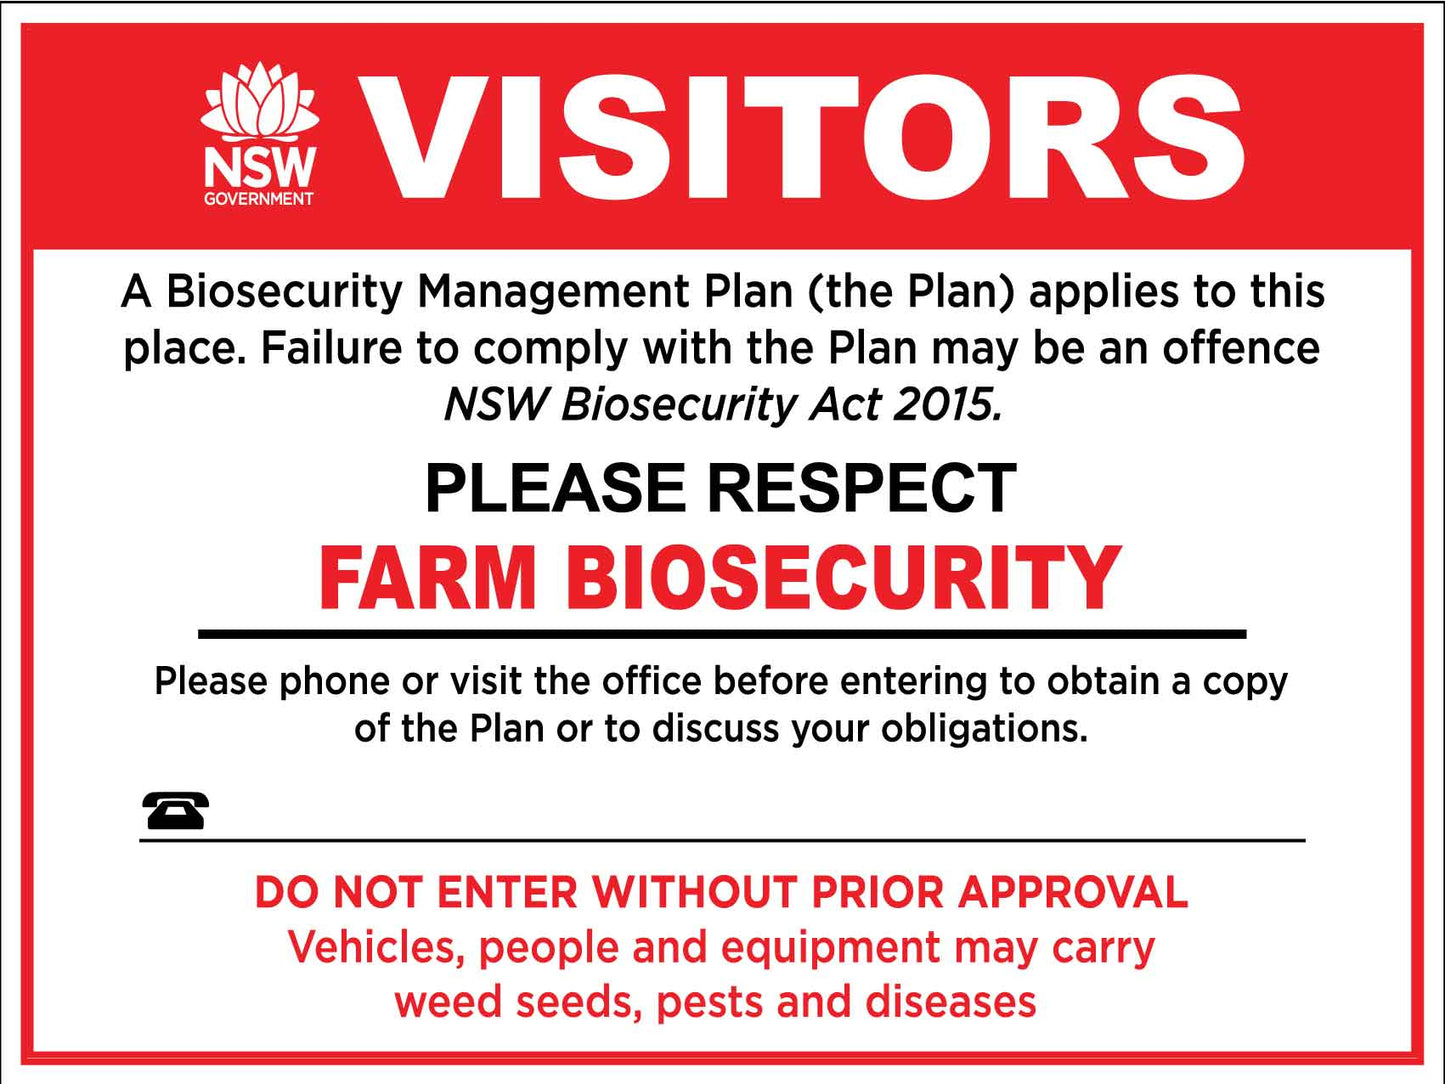 Farm Biosecurity Visitors NSW Management Plan Sign